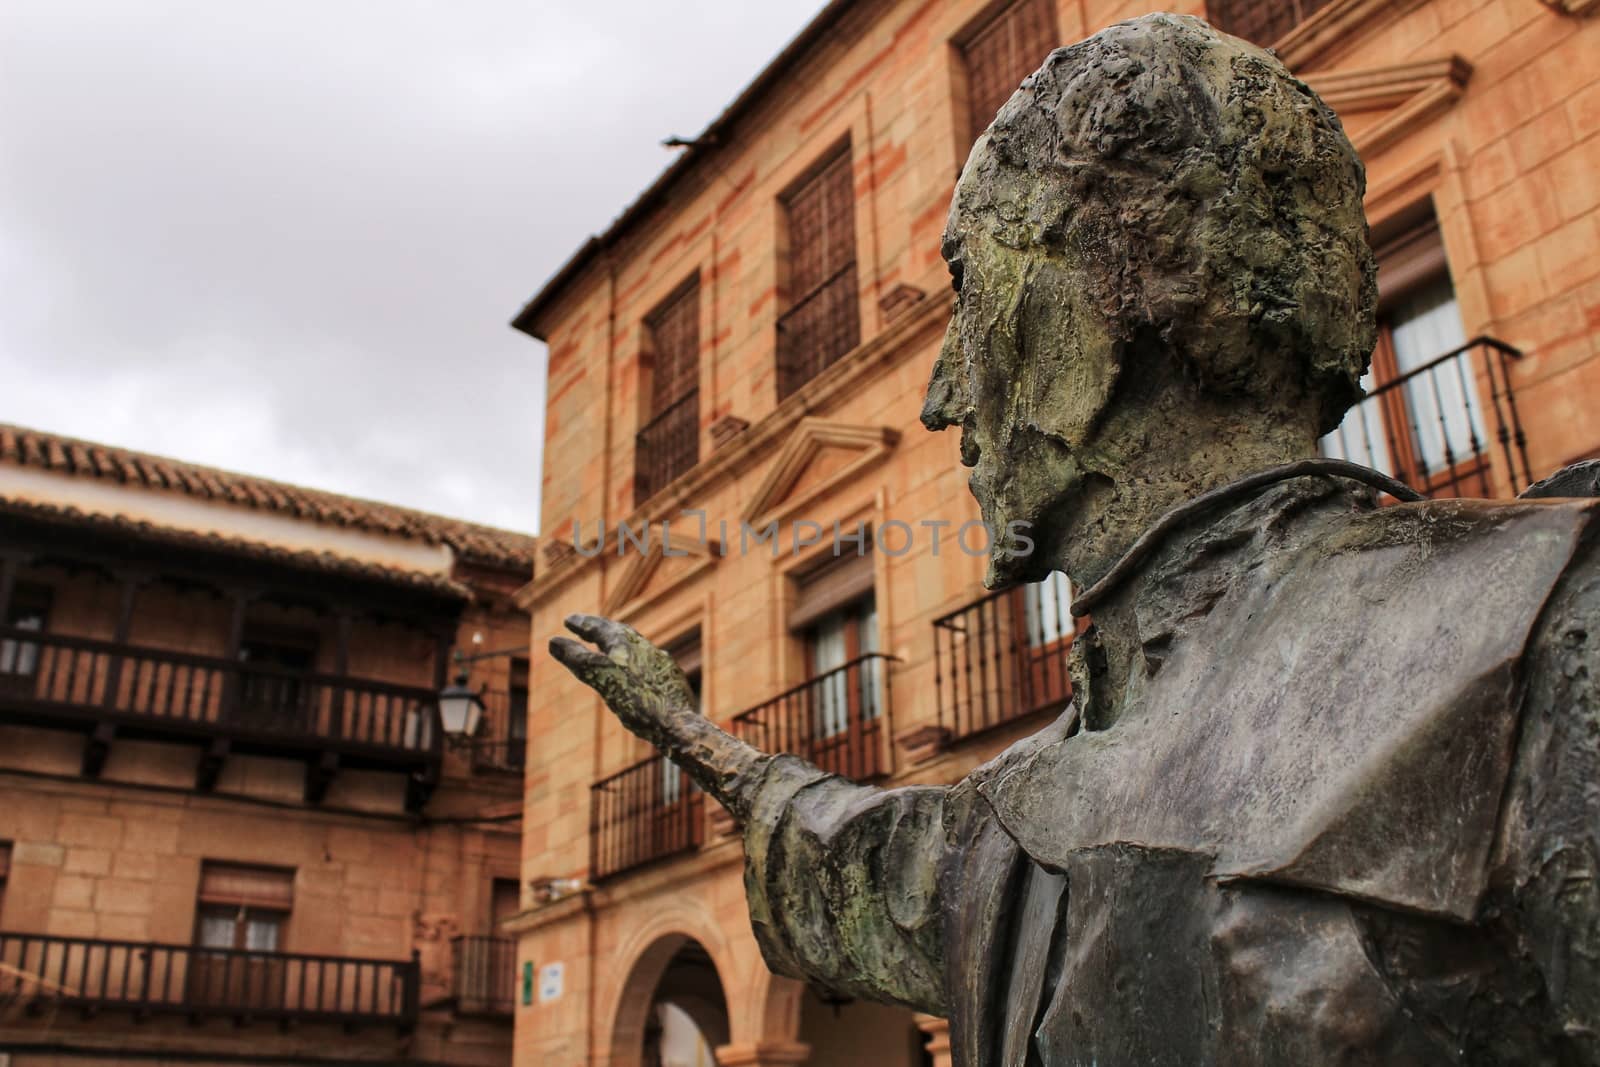 Villanueva de los Infantes square and Don Quixote statue in the foreground by soniabonet